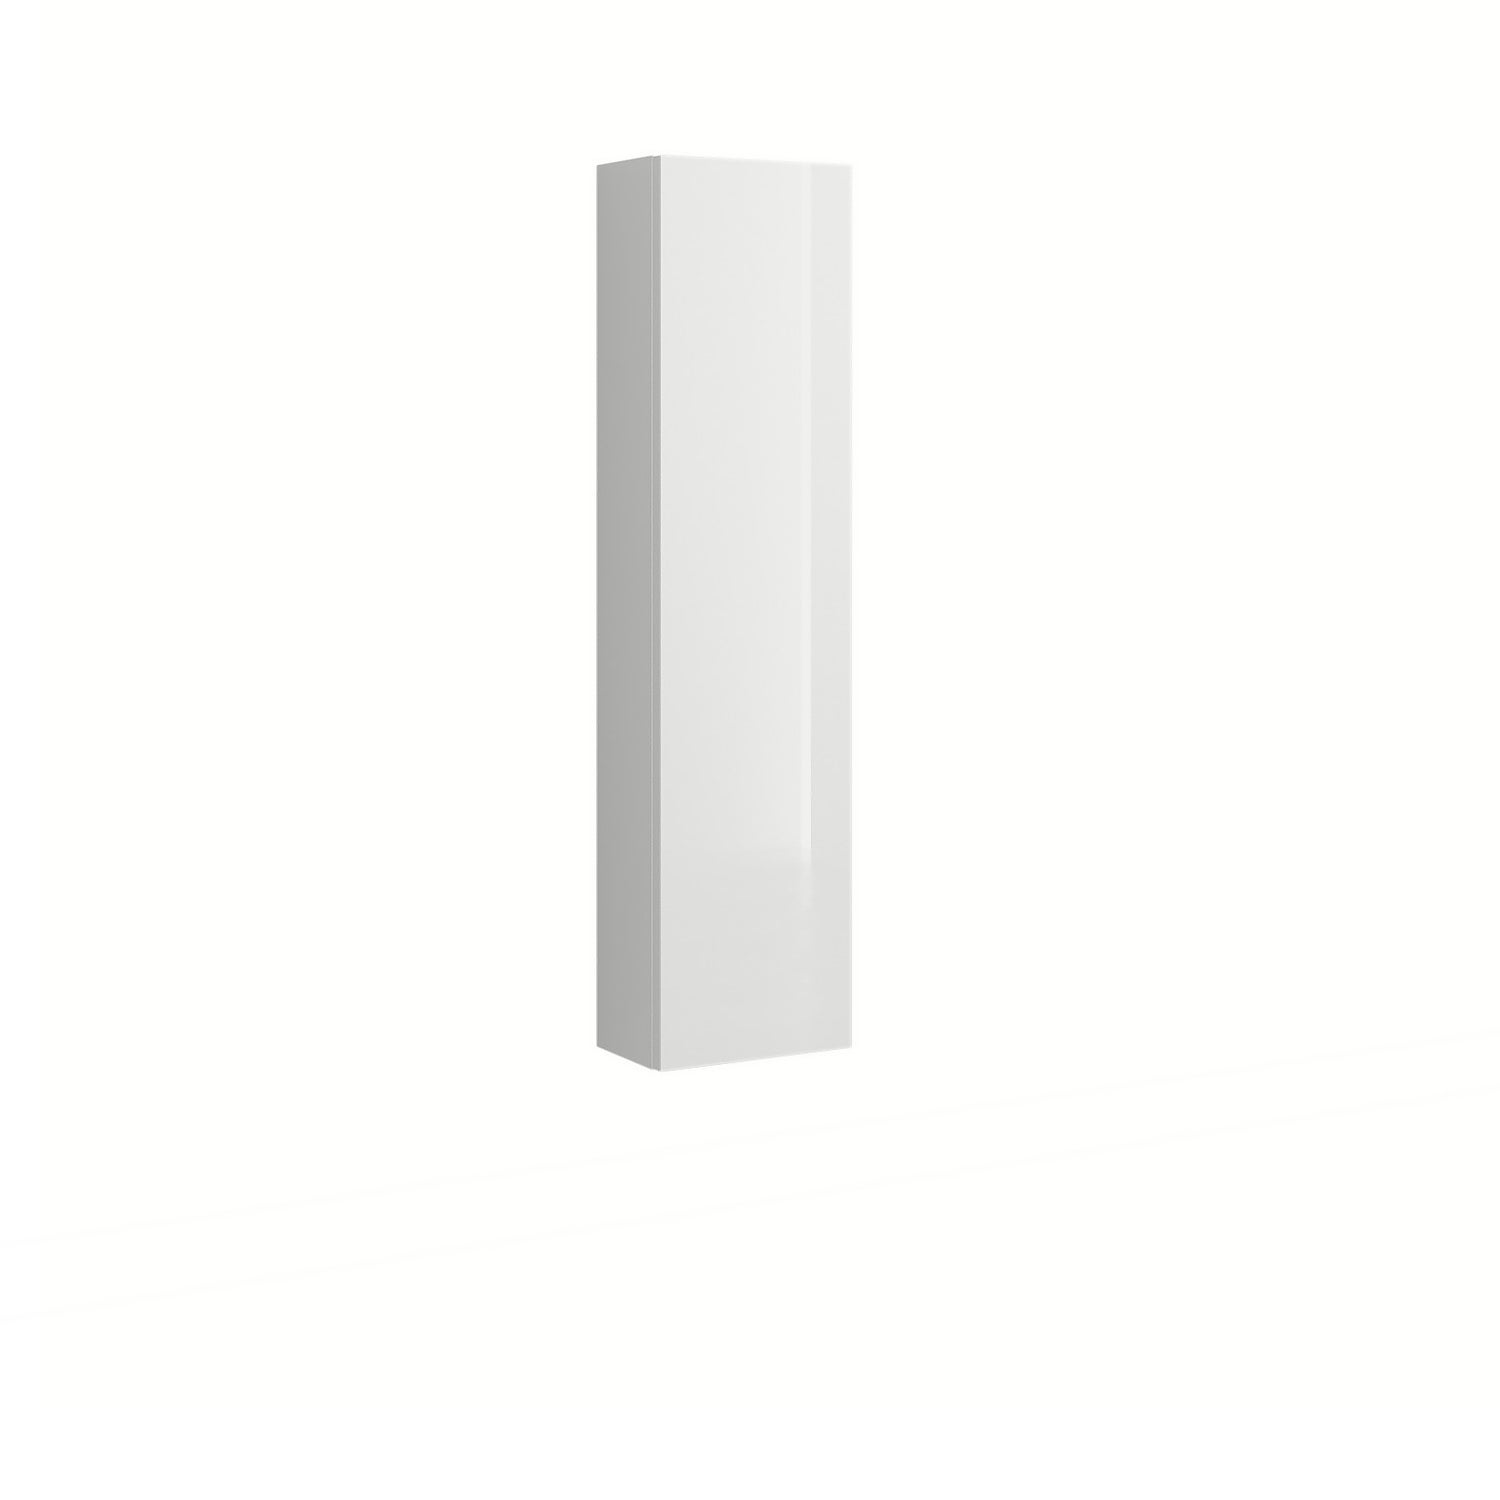 House Beautiful ele-ment(s) Tall Wall Hung Storage Unit - Gloss White